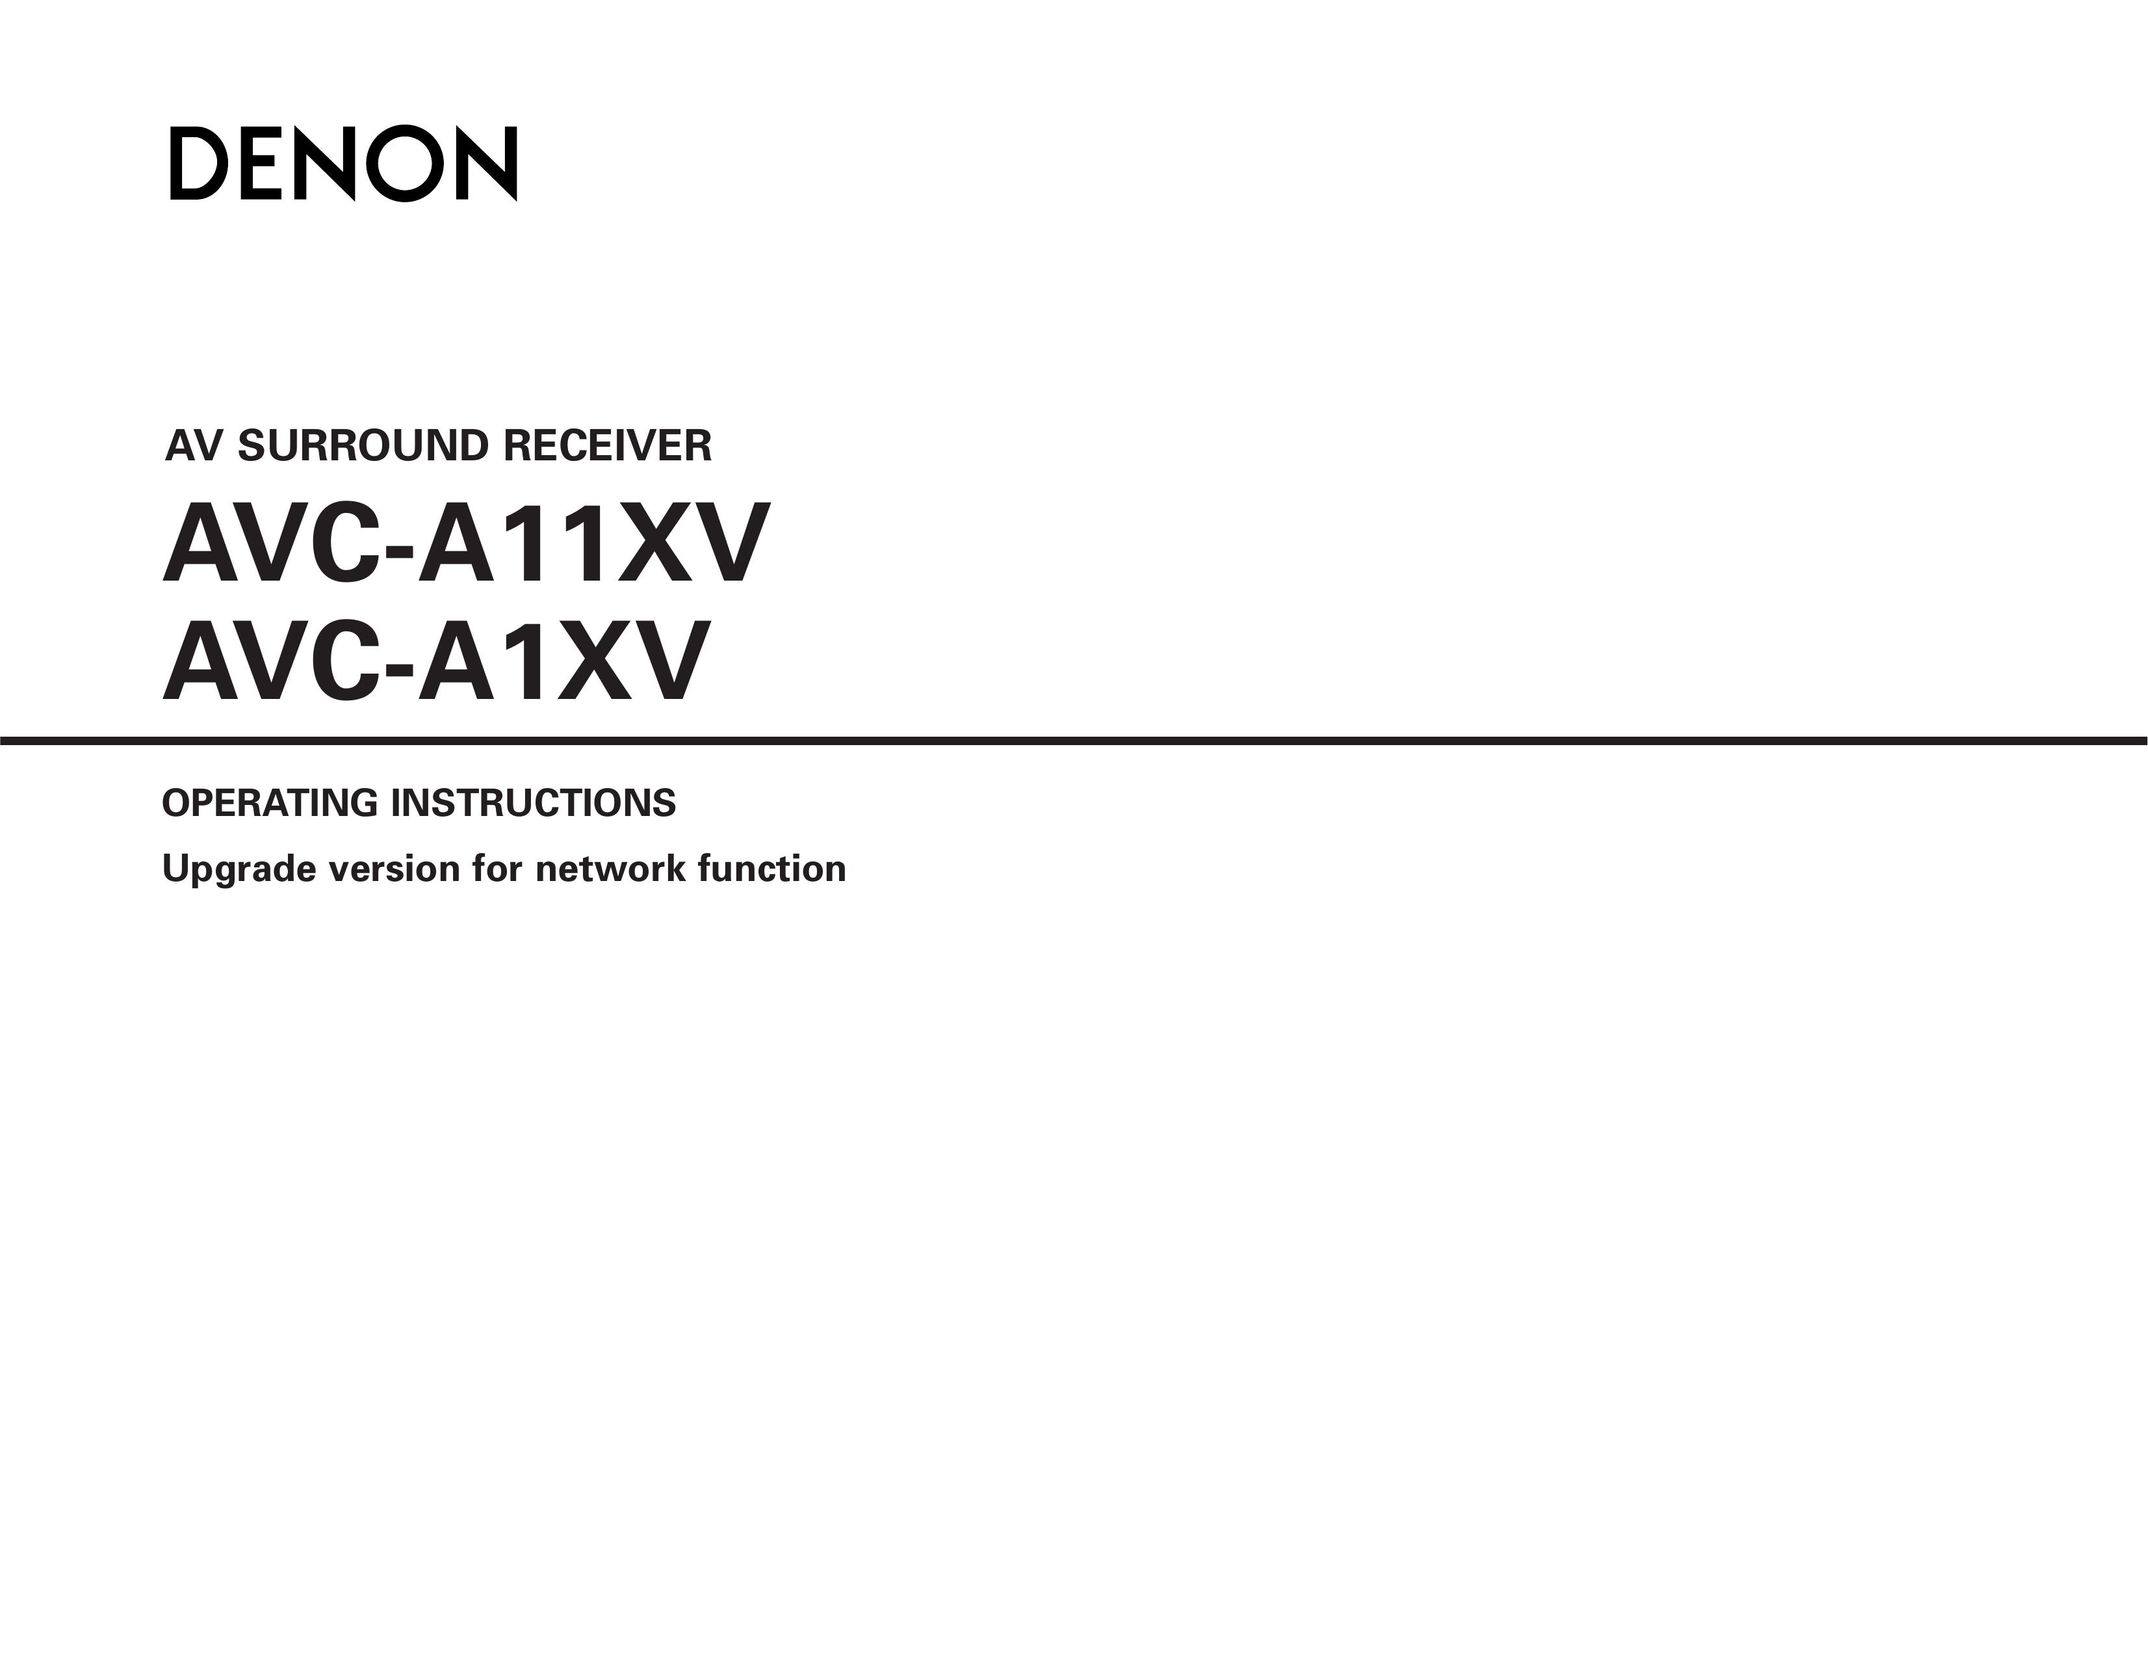 Denon AVC-A1XV Home Theater System User Manual